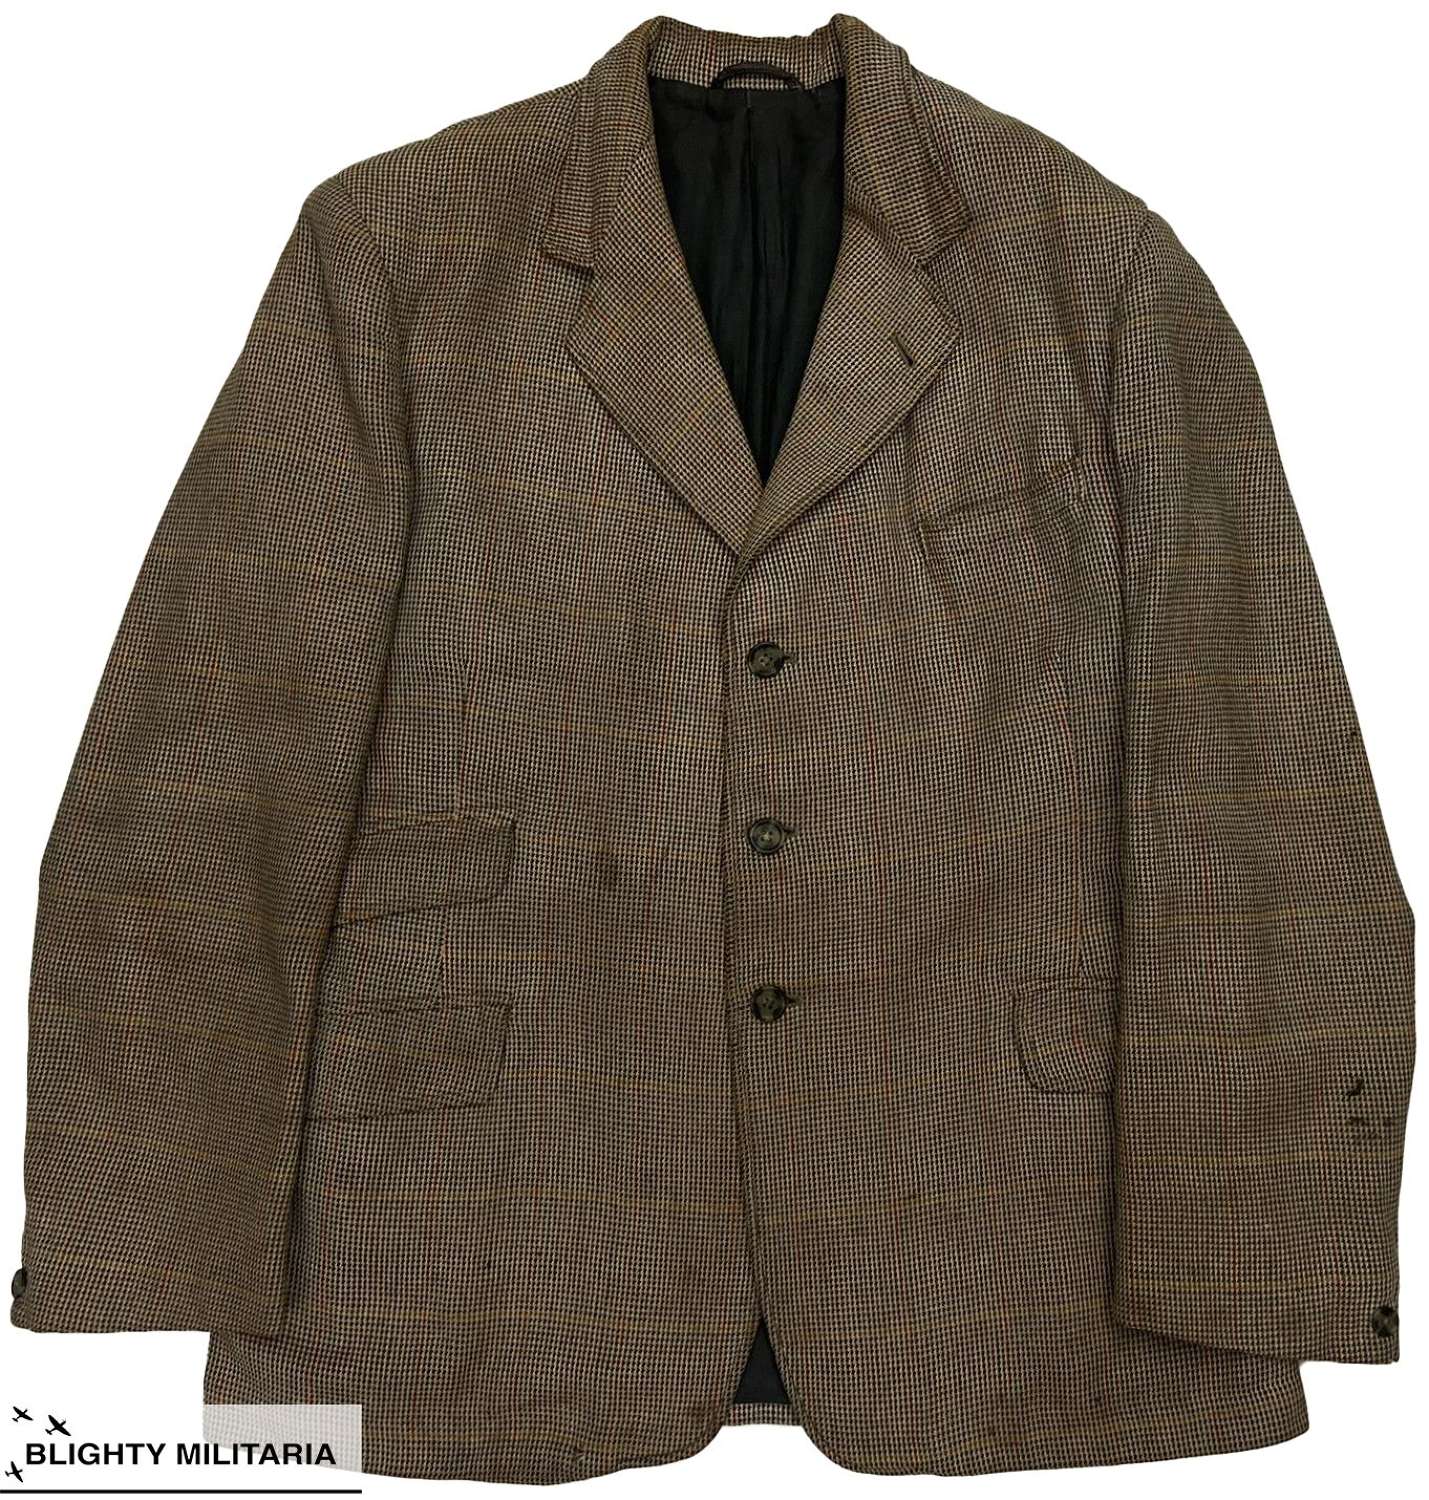 Original 1940s British Dogtooth Over-check Hacking Jacket